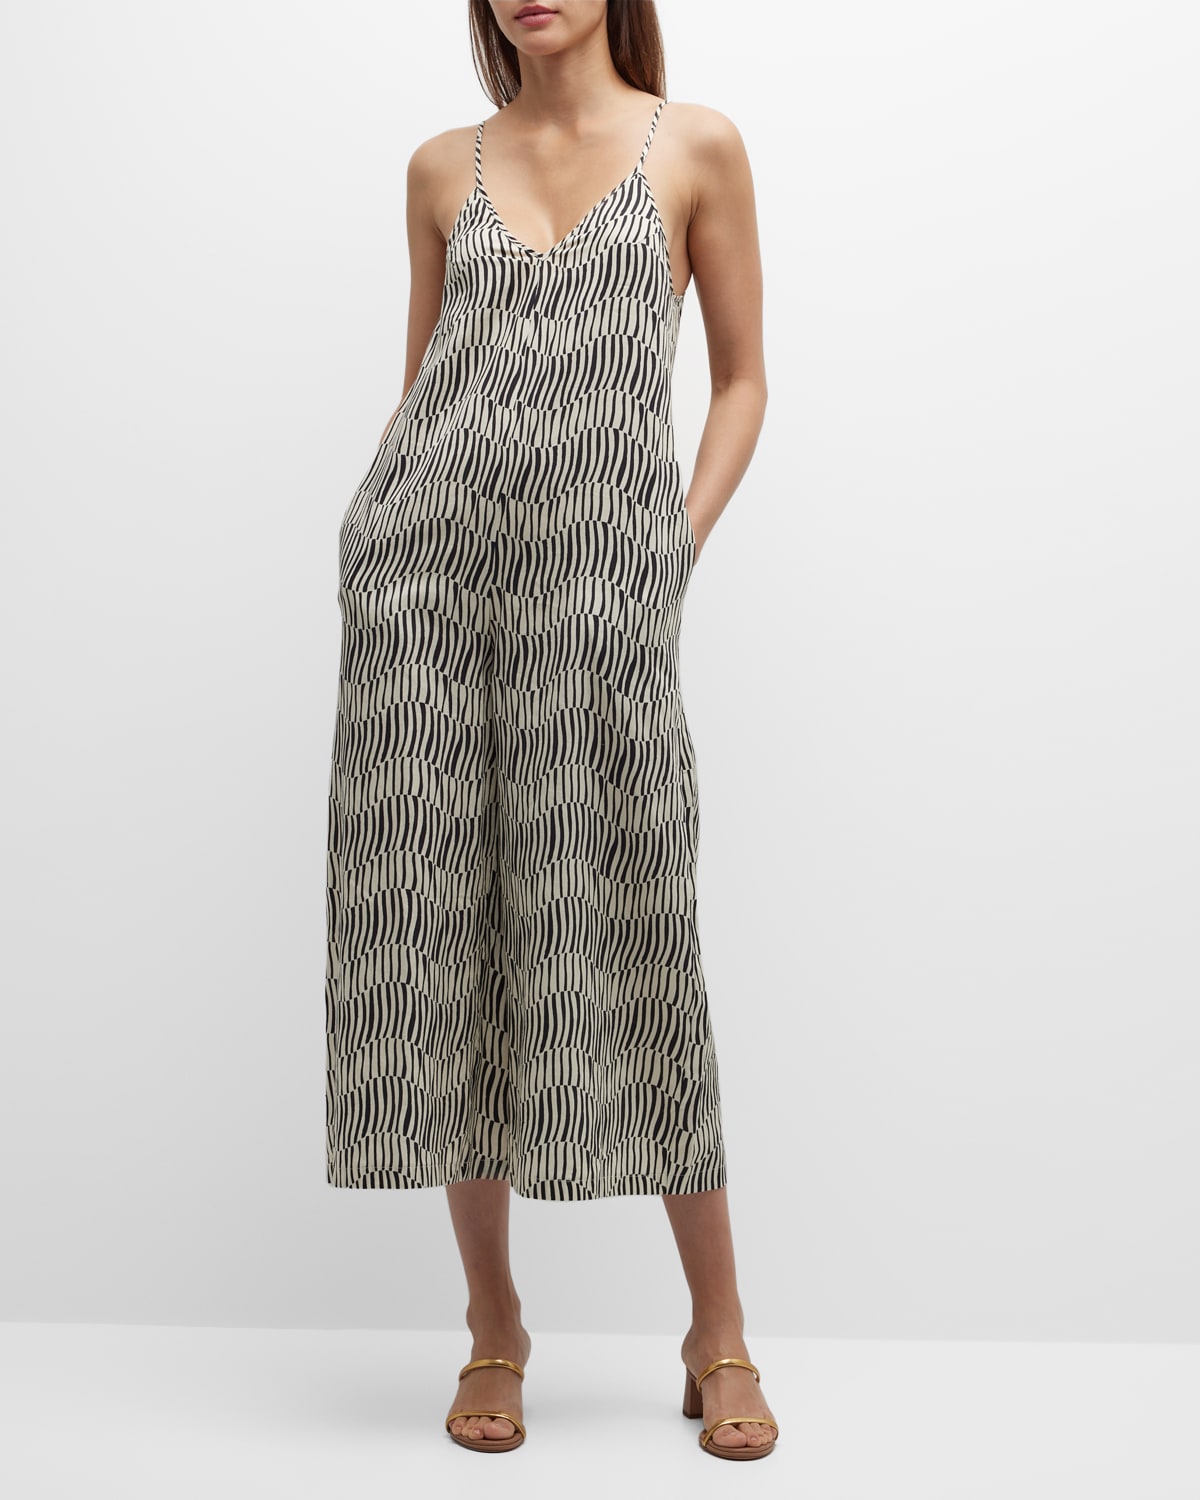 Frances Valentine Cheree Cropped Zebra-Print Jumpsuit